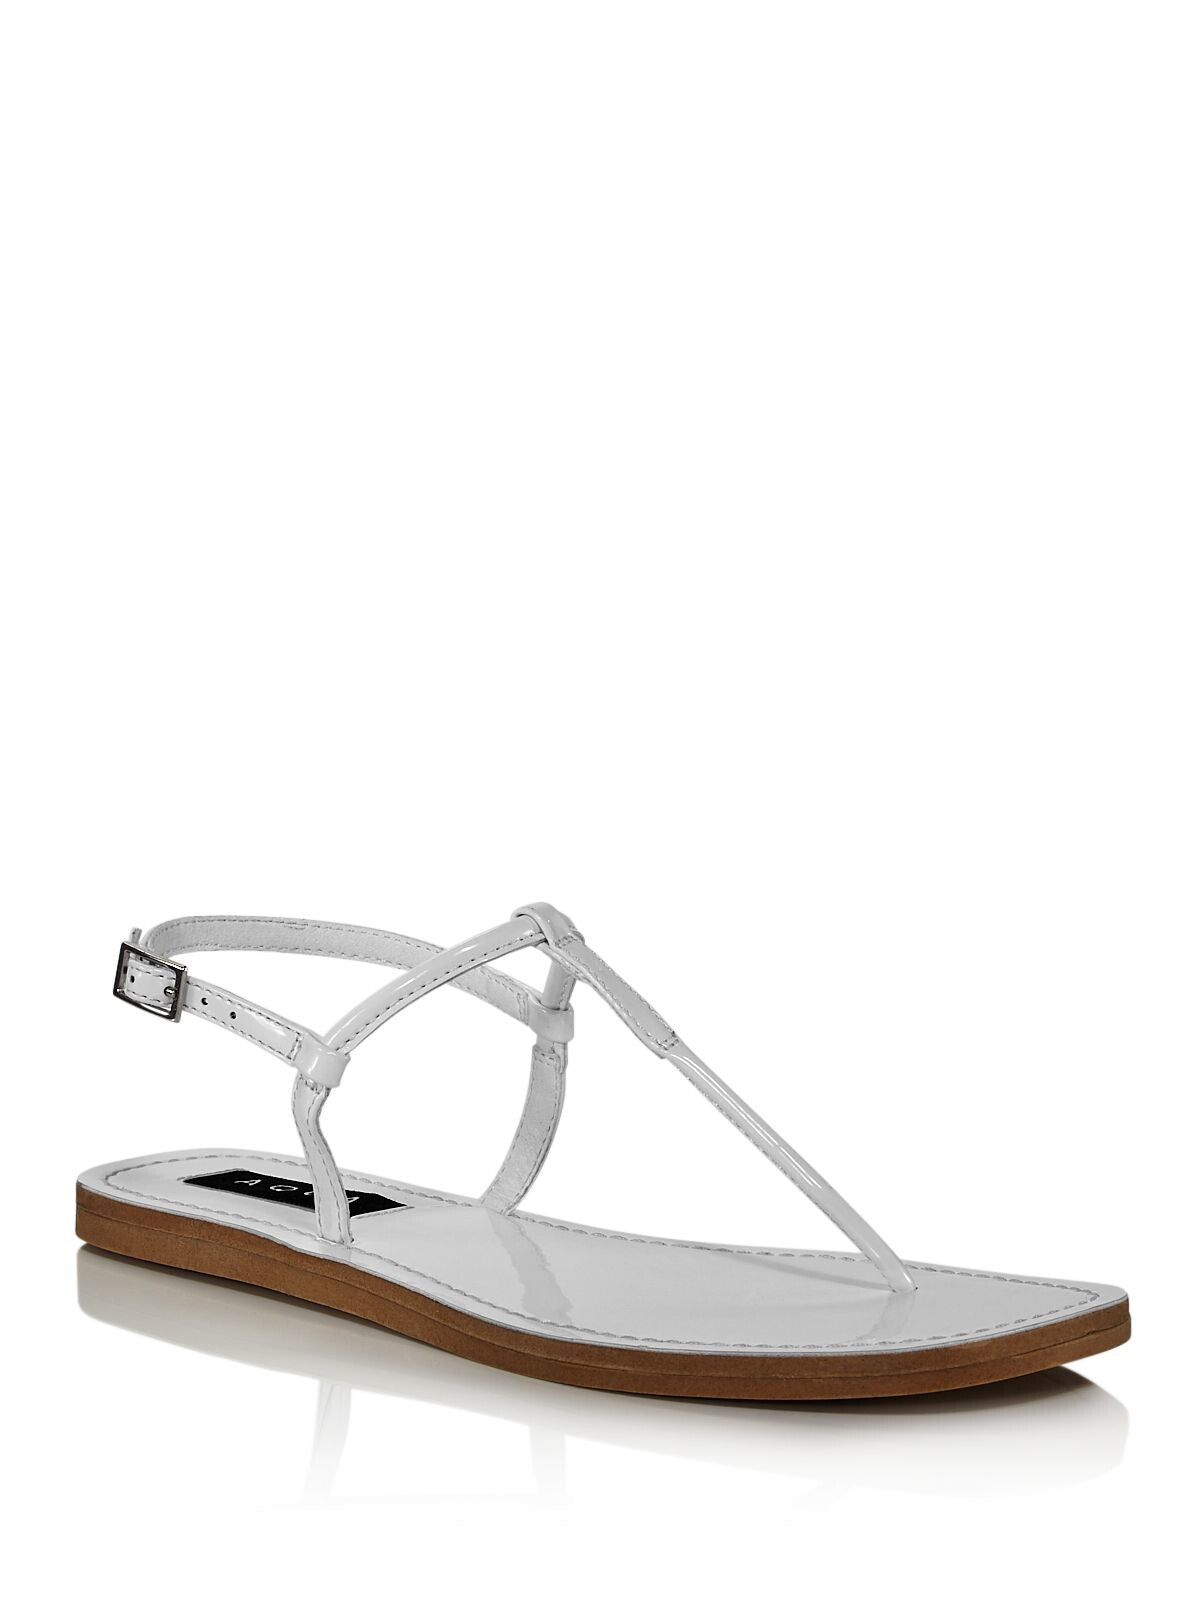 AQUA Womens White T-Strap Zen Round Toe Buckle Thong Sandals Shoes 8 M